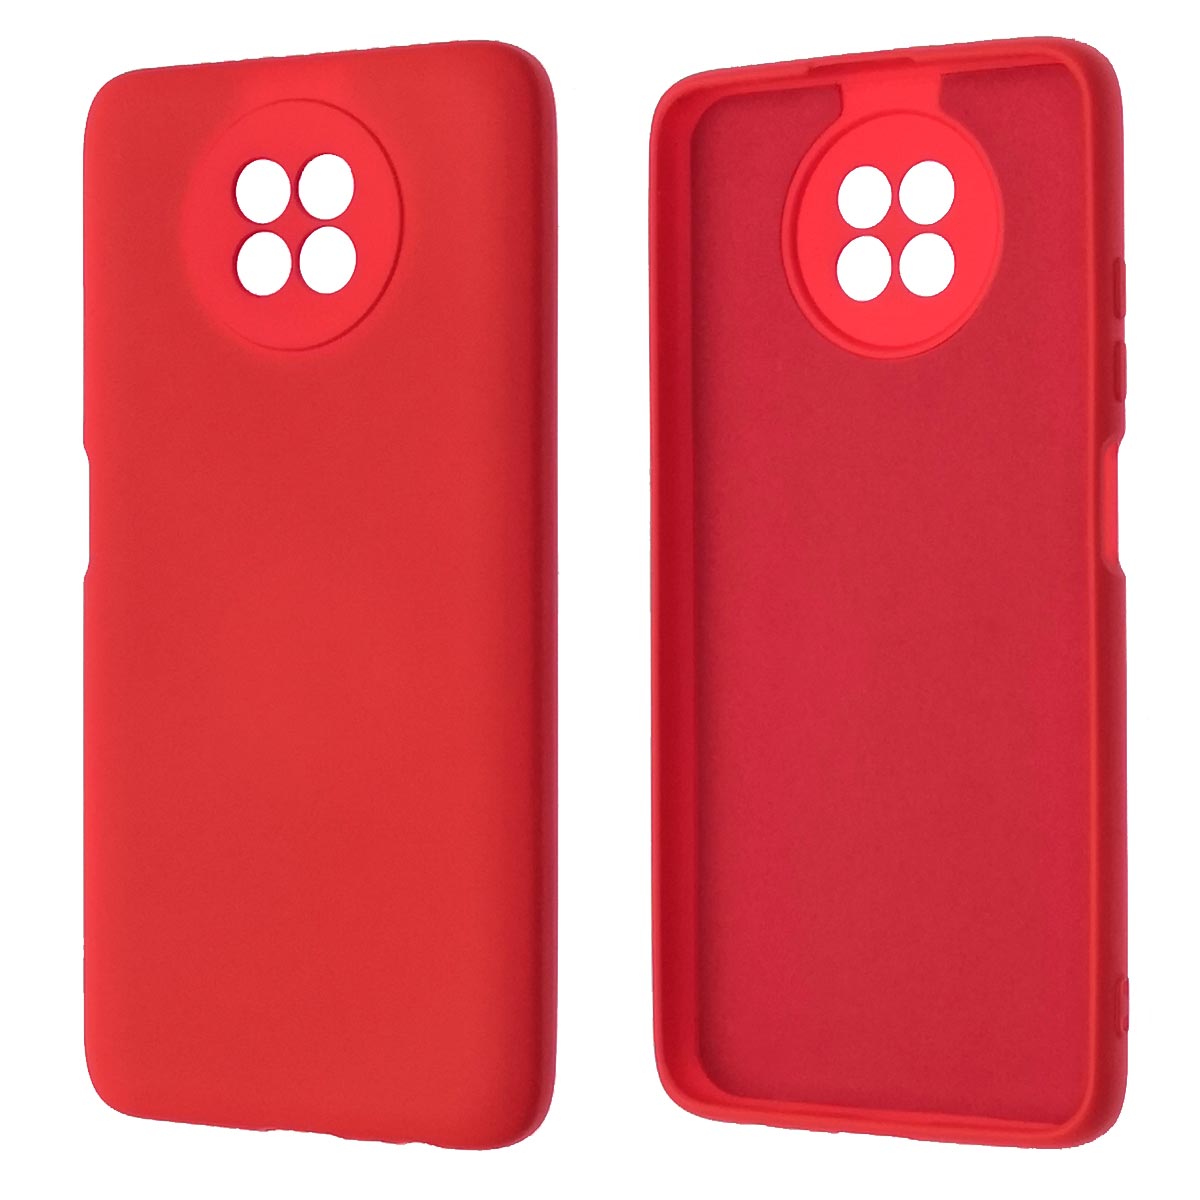 Чехол накладка Silicon Cover для XIAOMI Redmi Note 9T, силикон, бархат, цвет красный